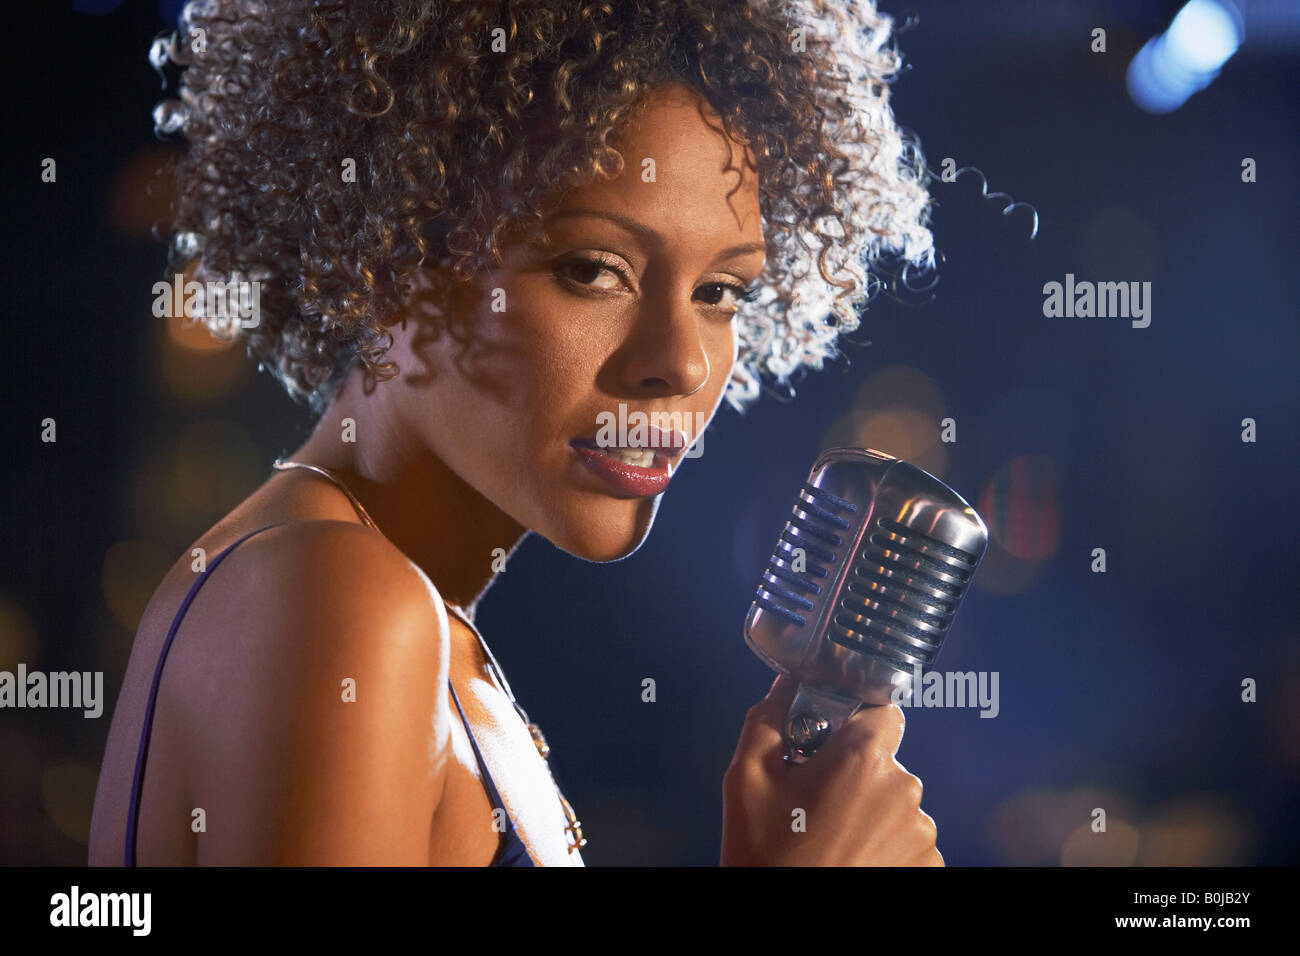 Jazz Singer Performing in Club Stock Photo